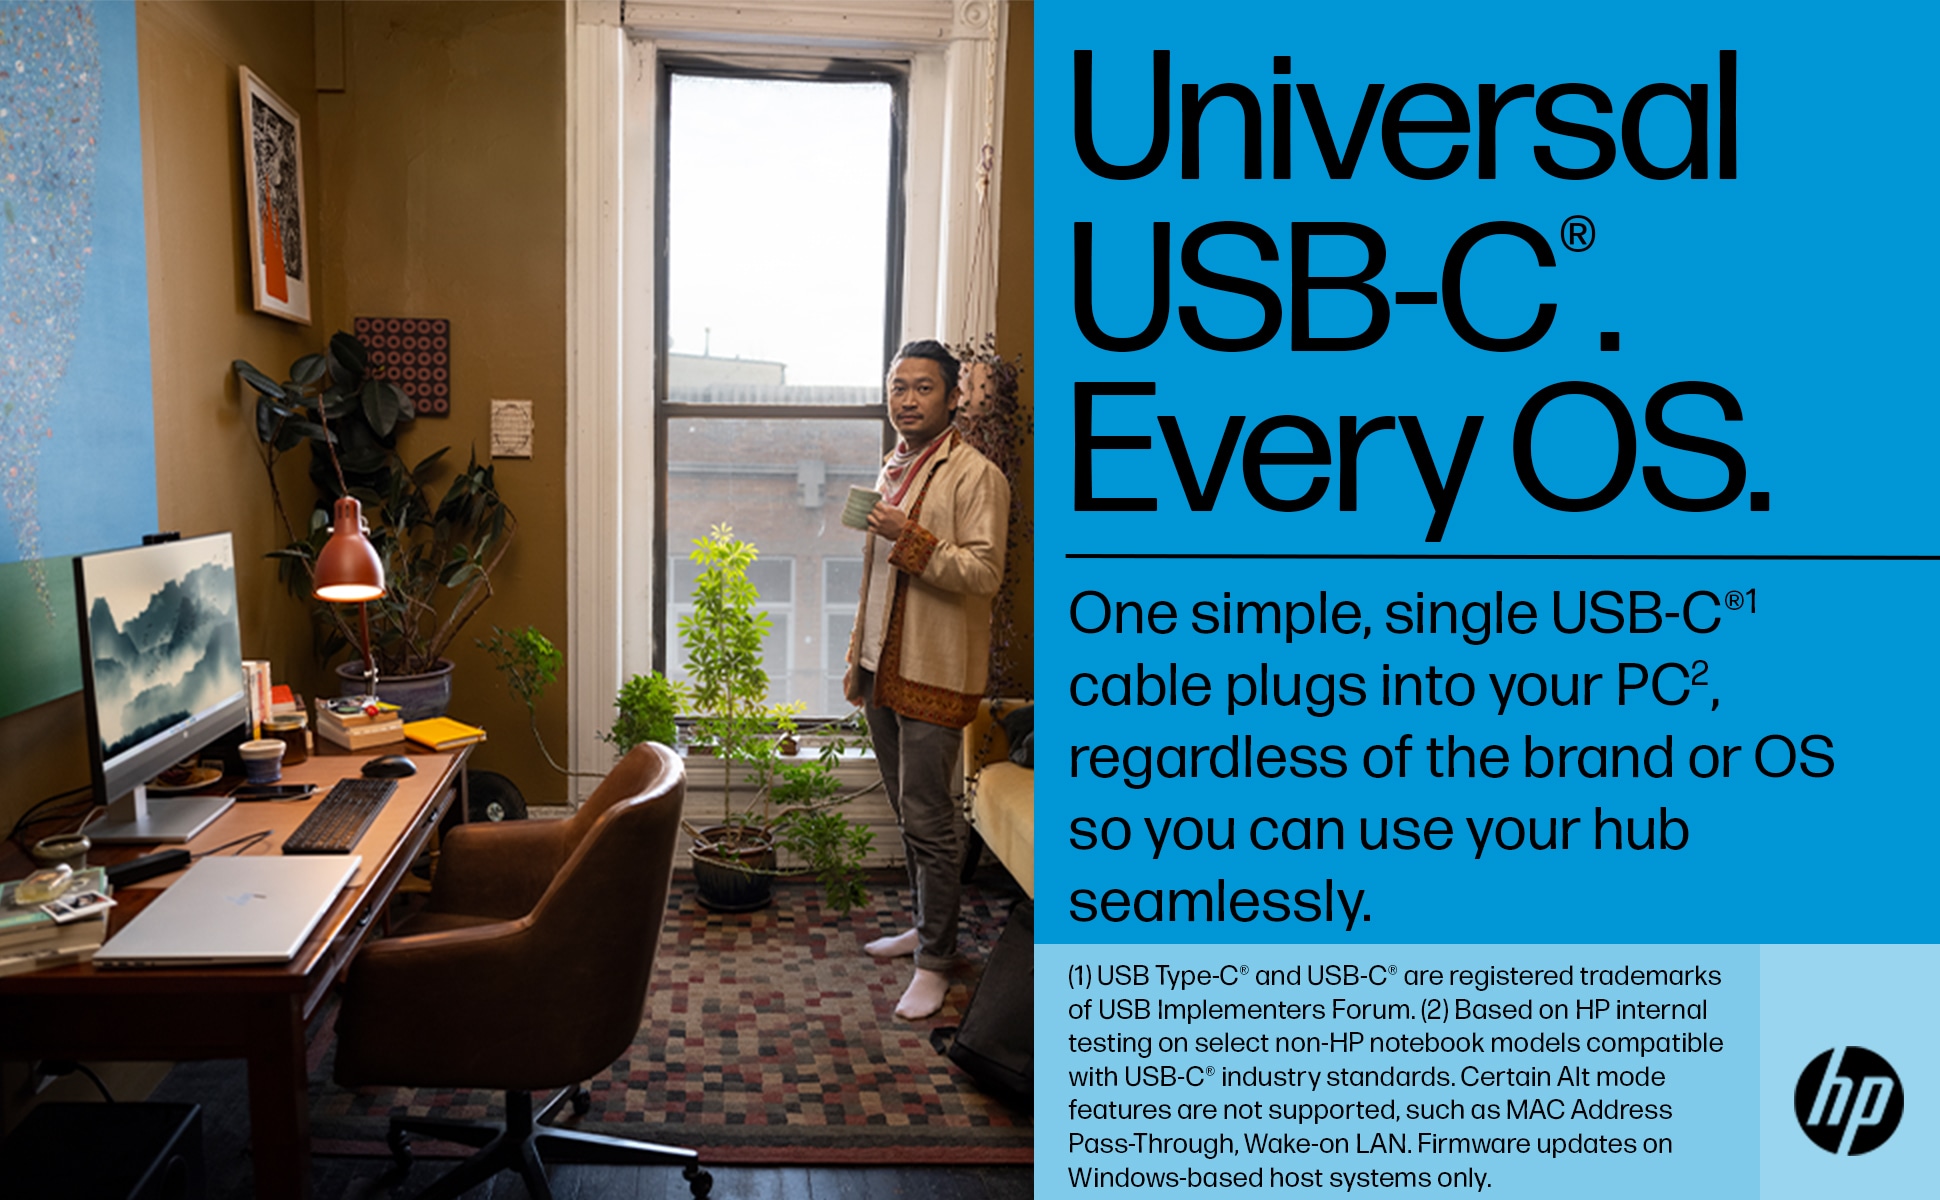 HP Universal USB-C Multiport Hub